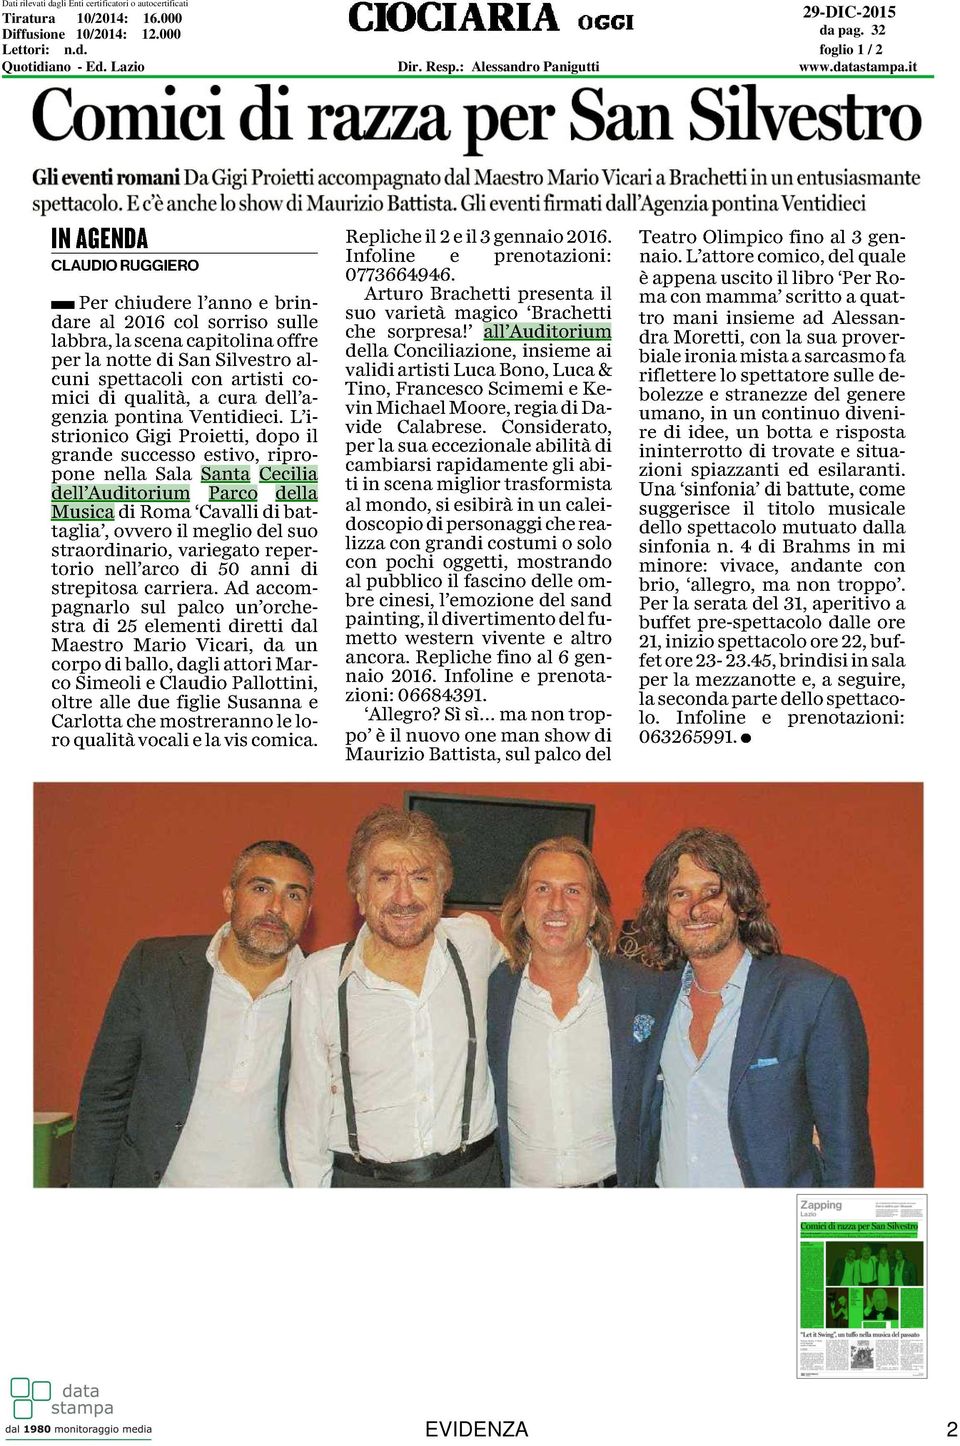 000 Lettori: n.d. Quotidiano - Ed.